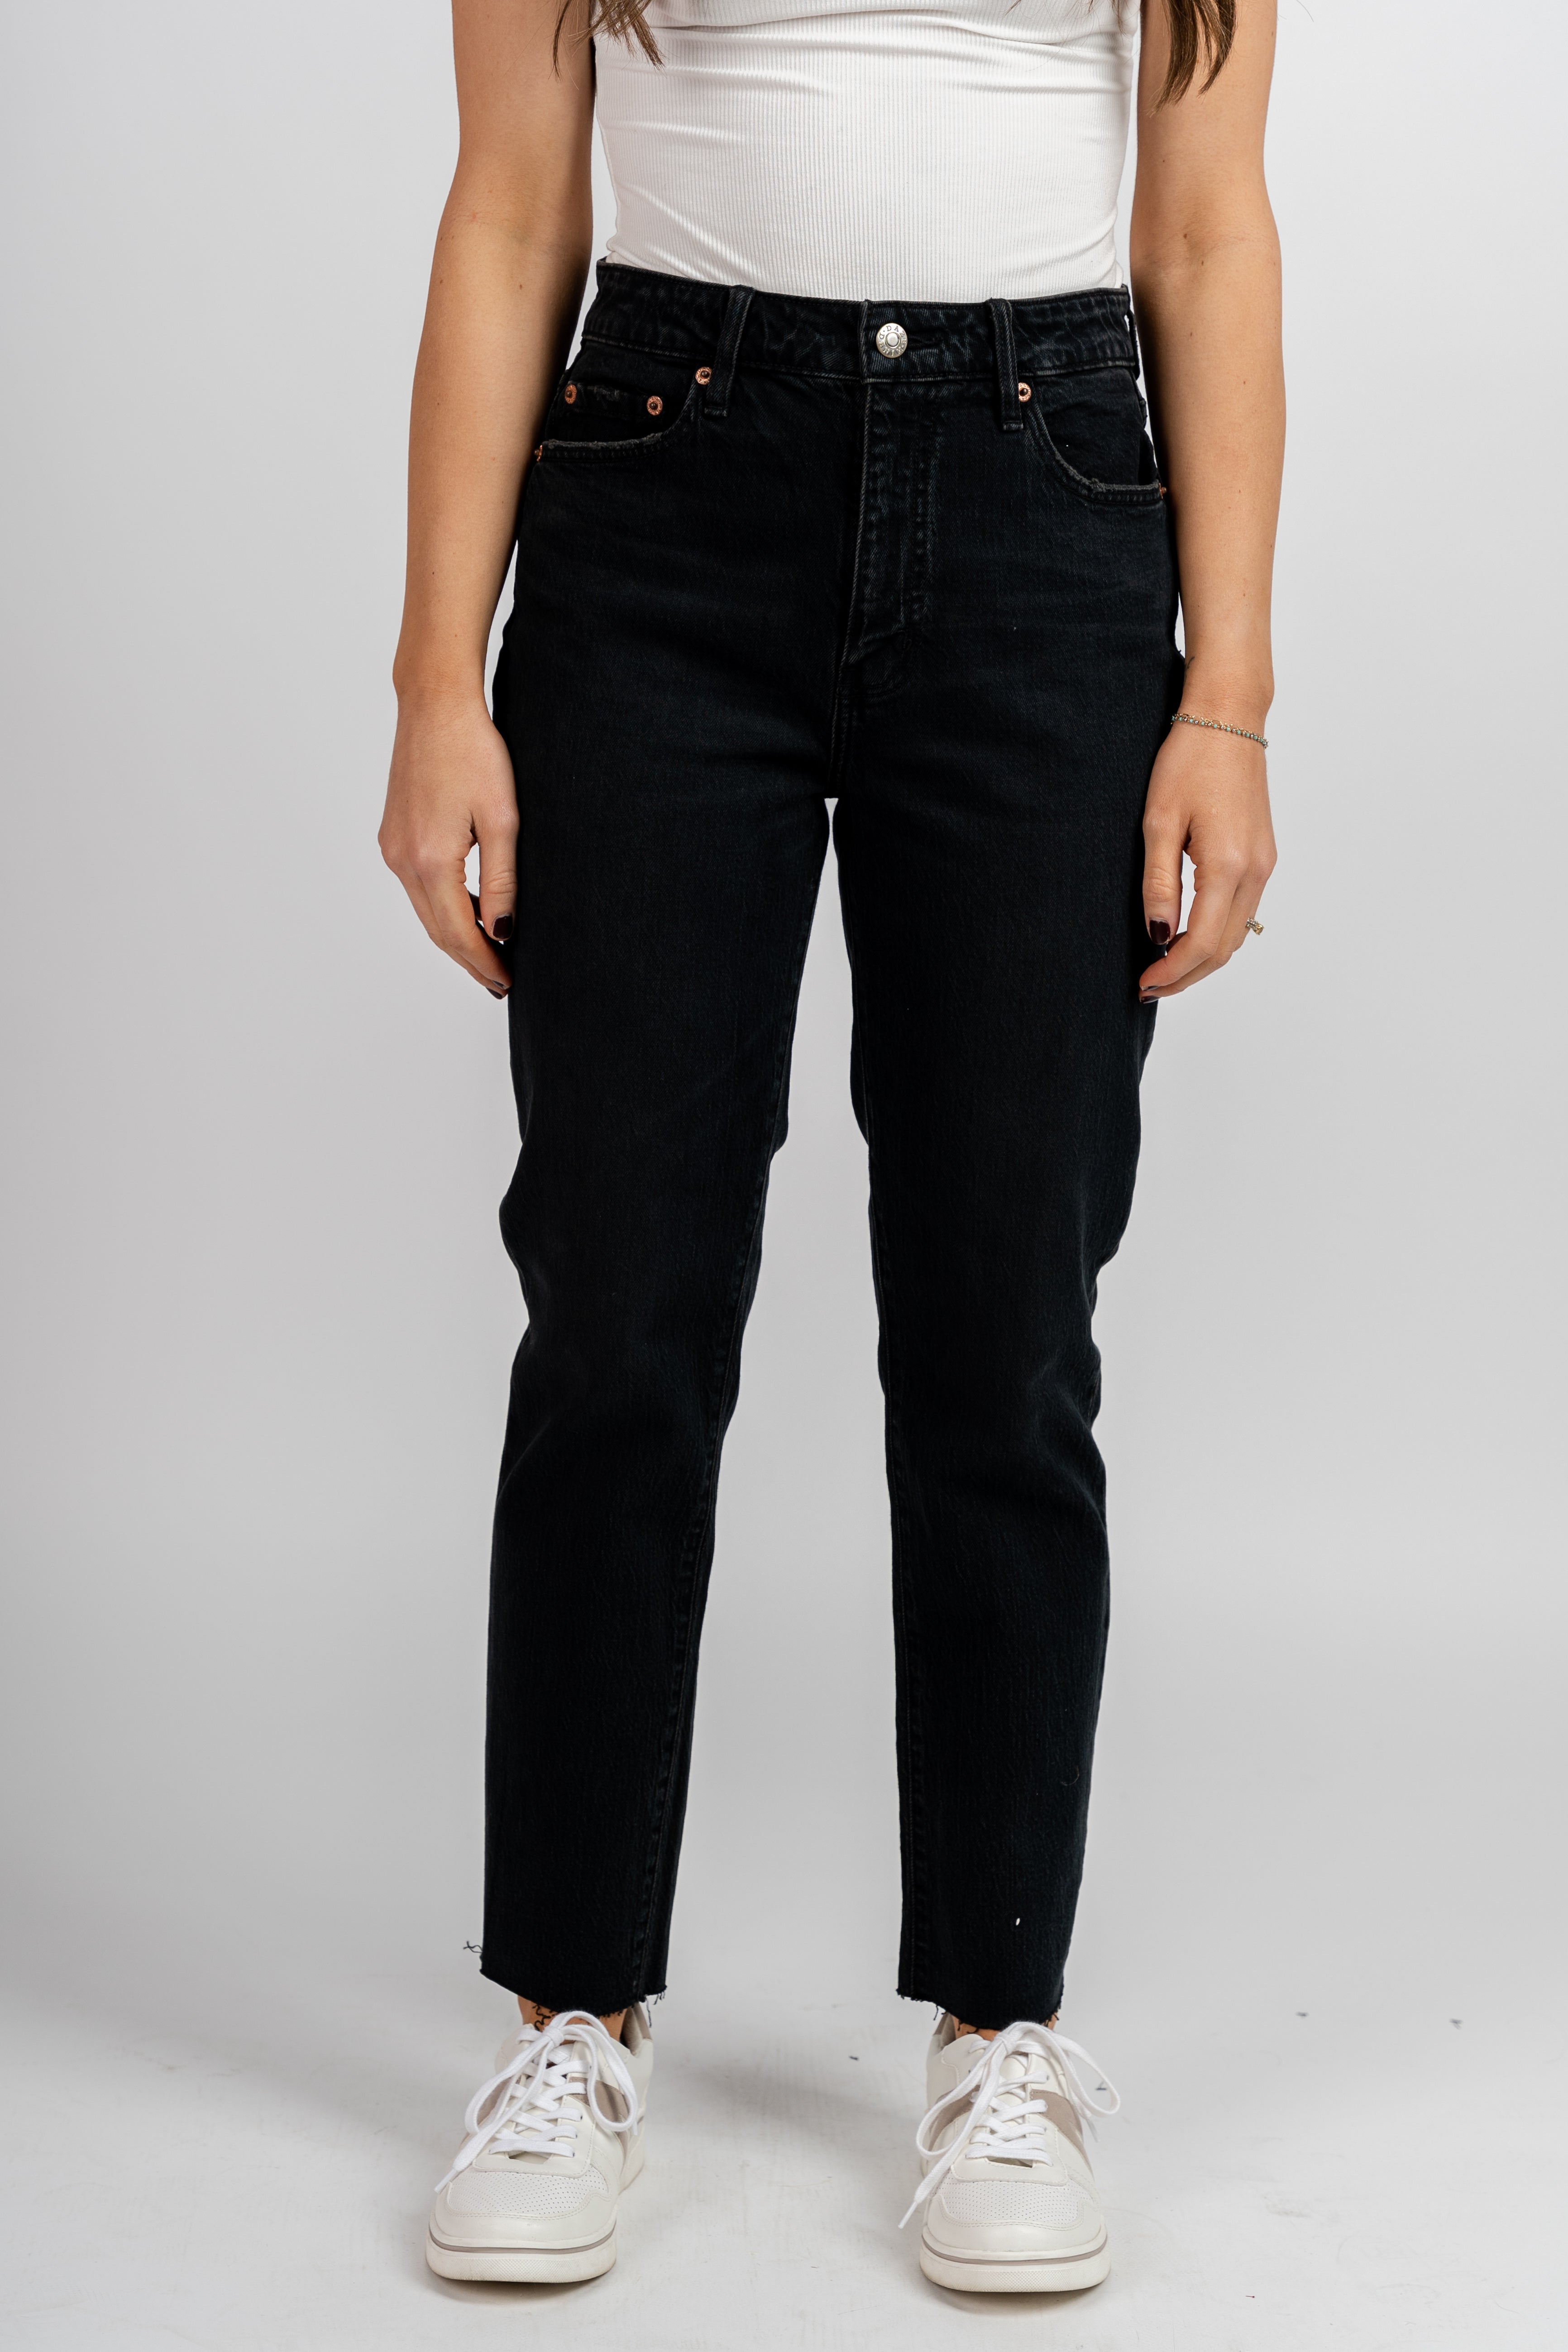 Daze denim daily driver high rise jeans inked | Jeans Lush Fashion Lounge